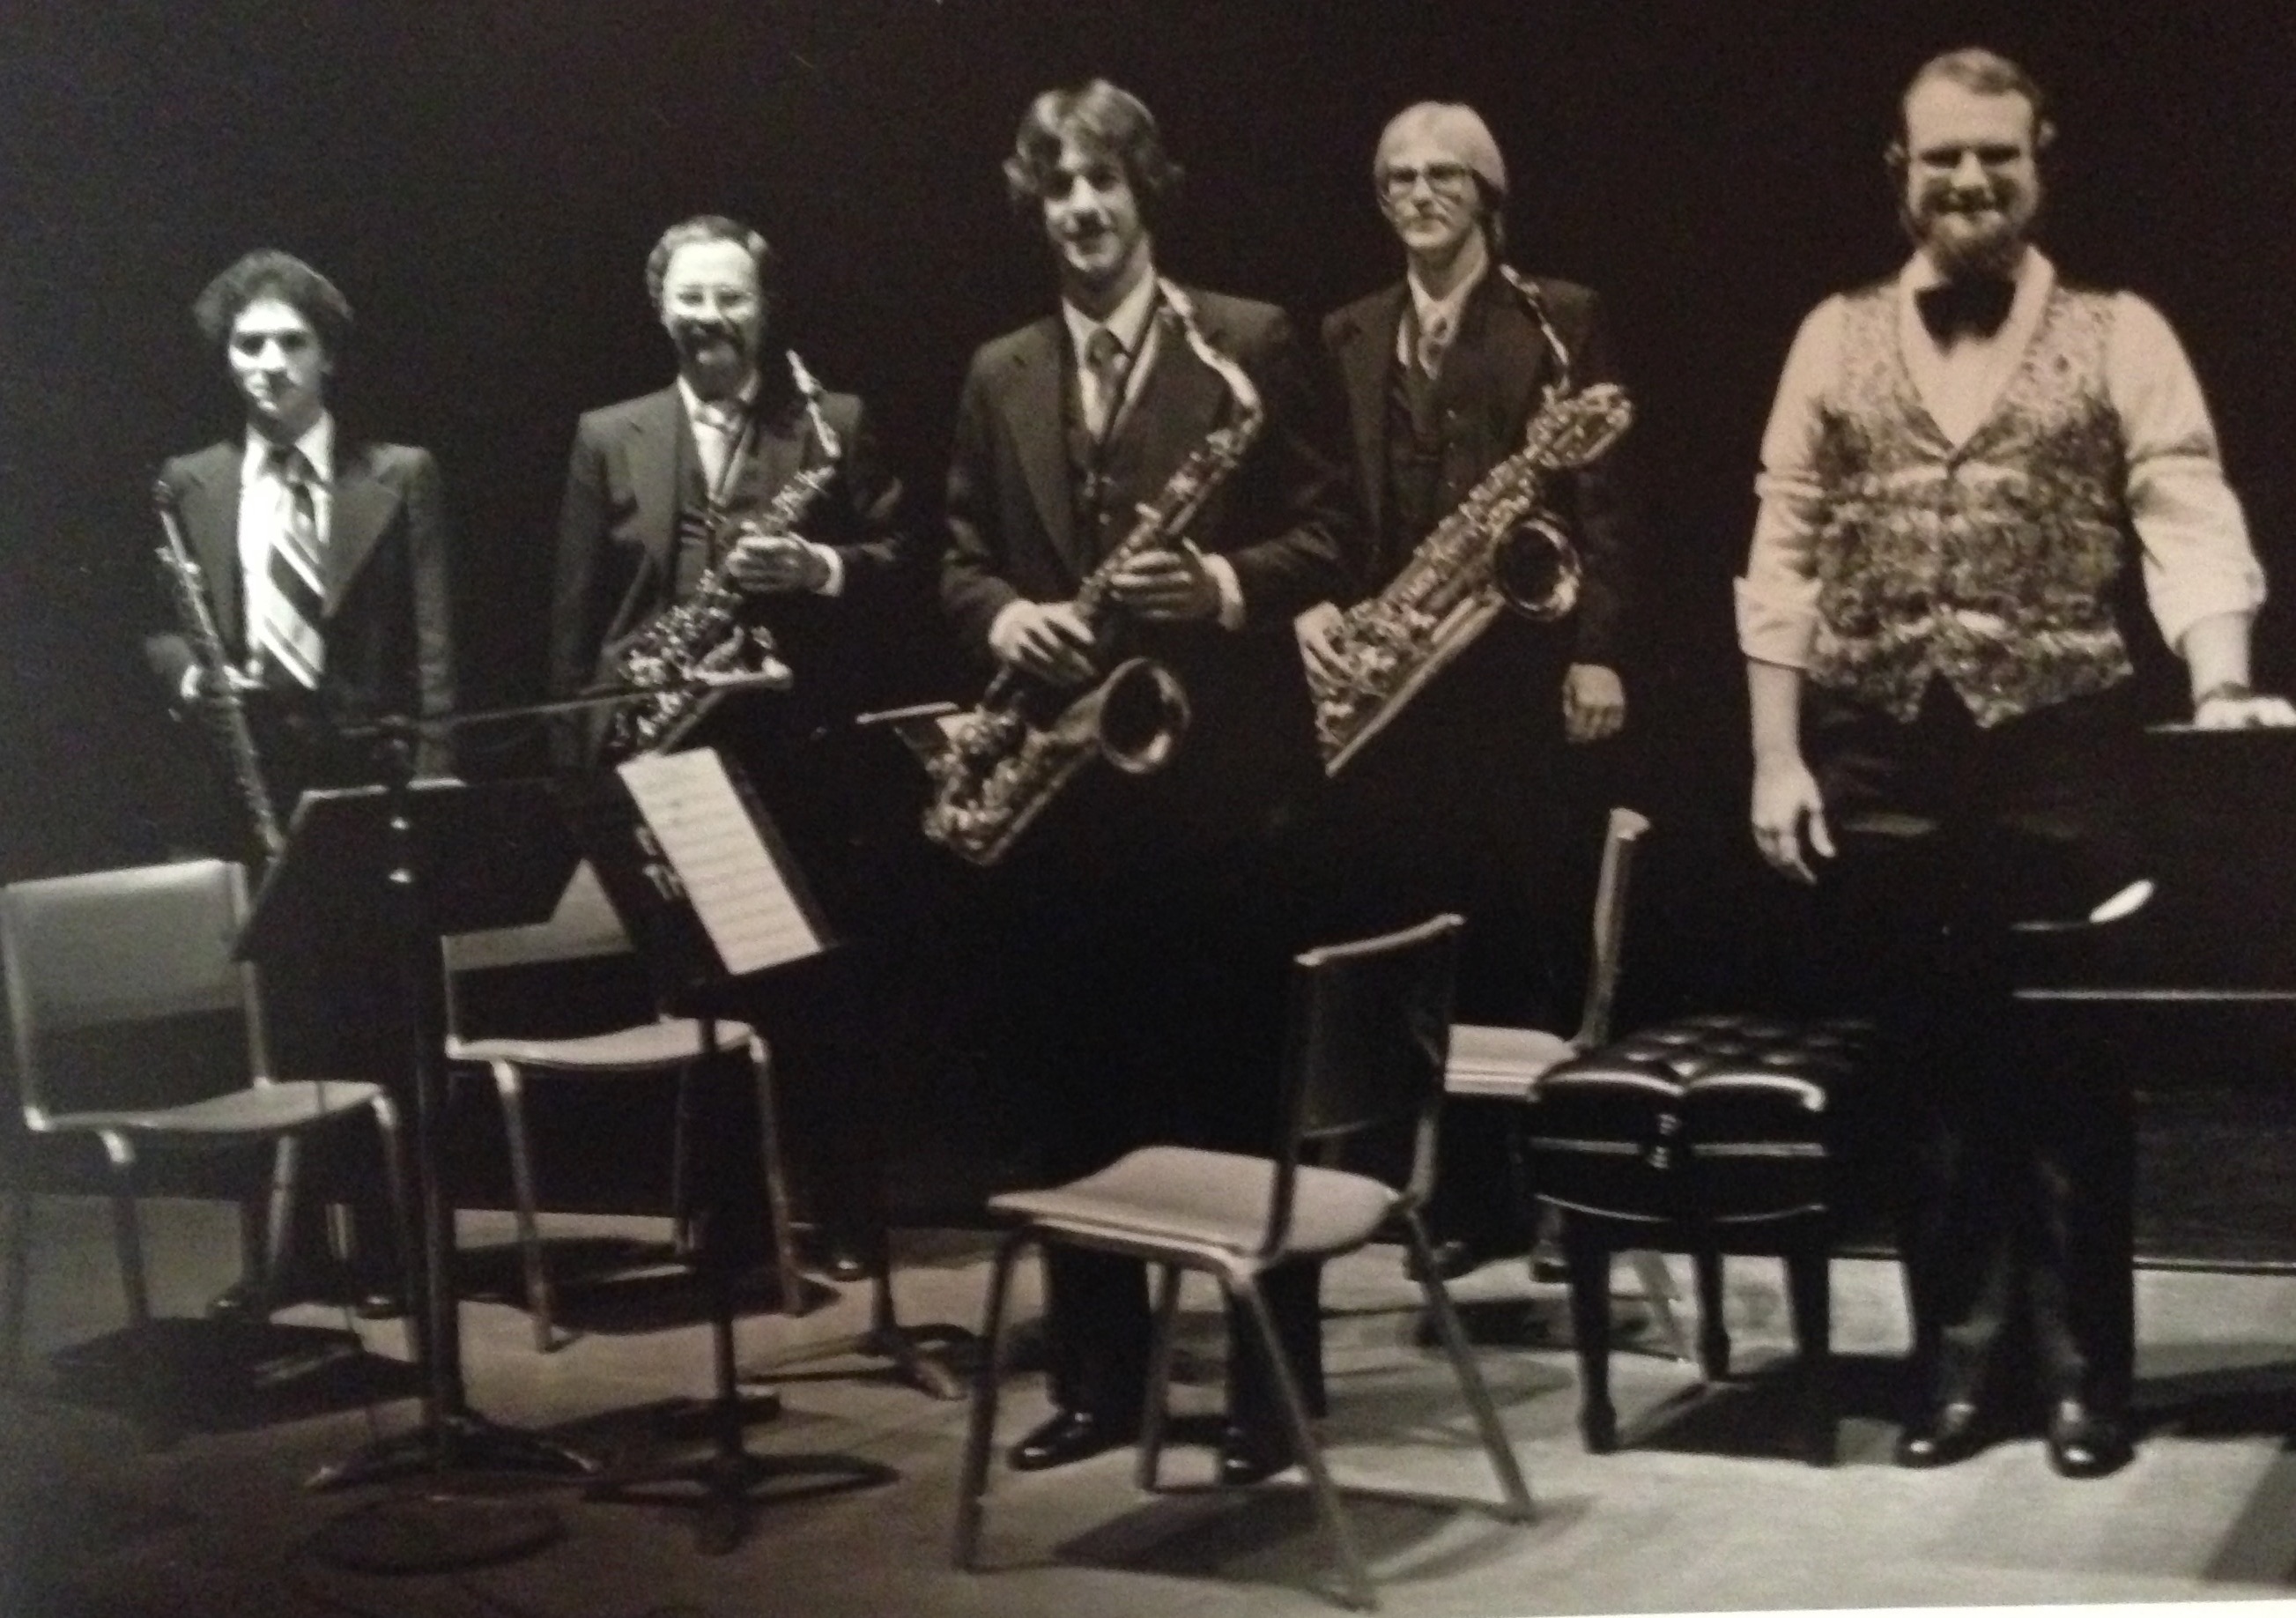 Radeck and the
Amherst Saxophone Quartet